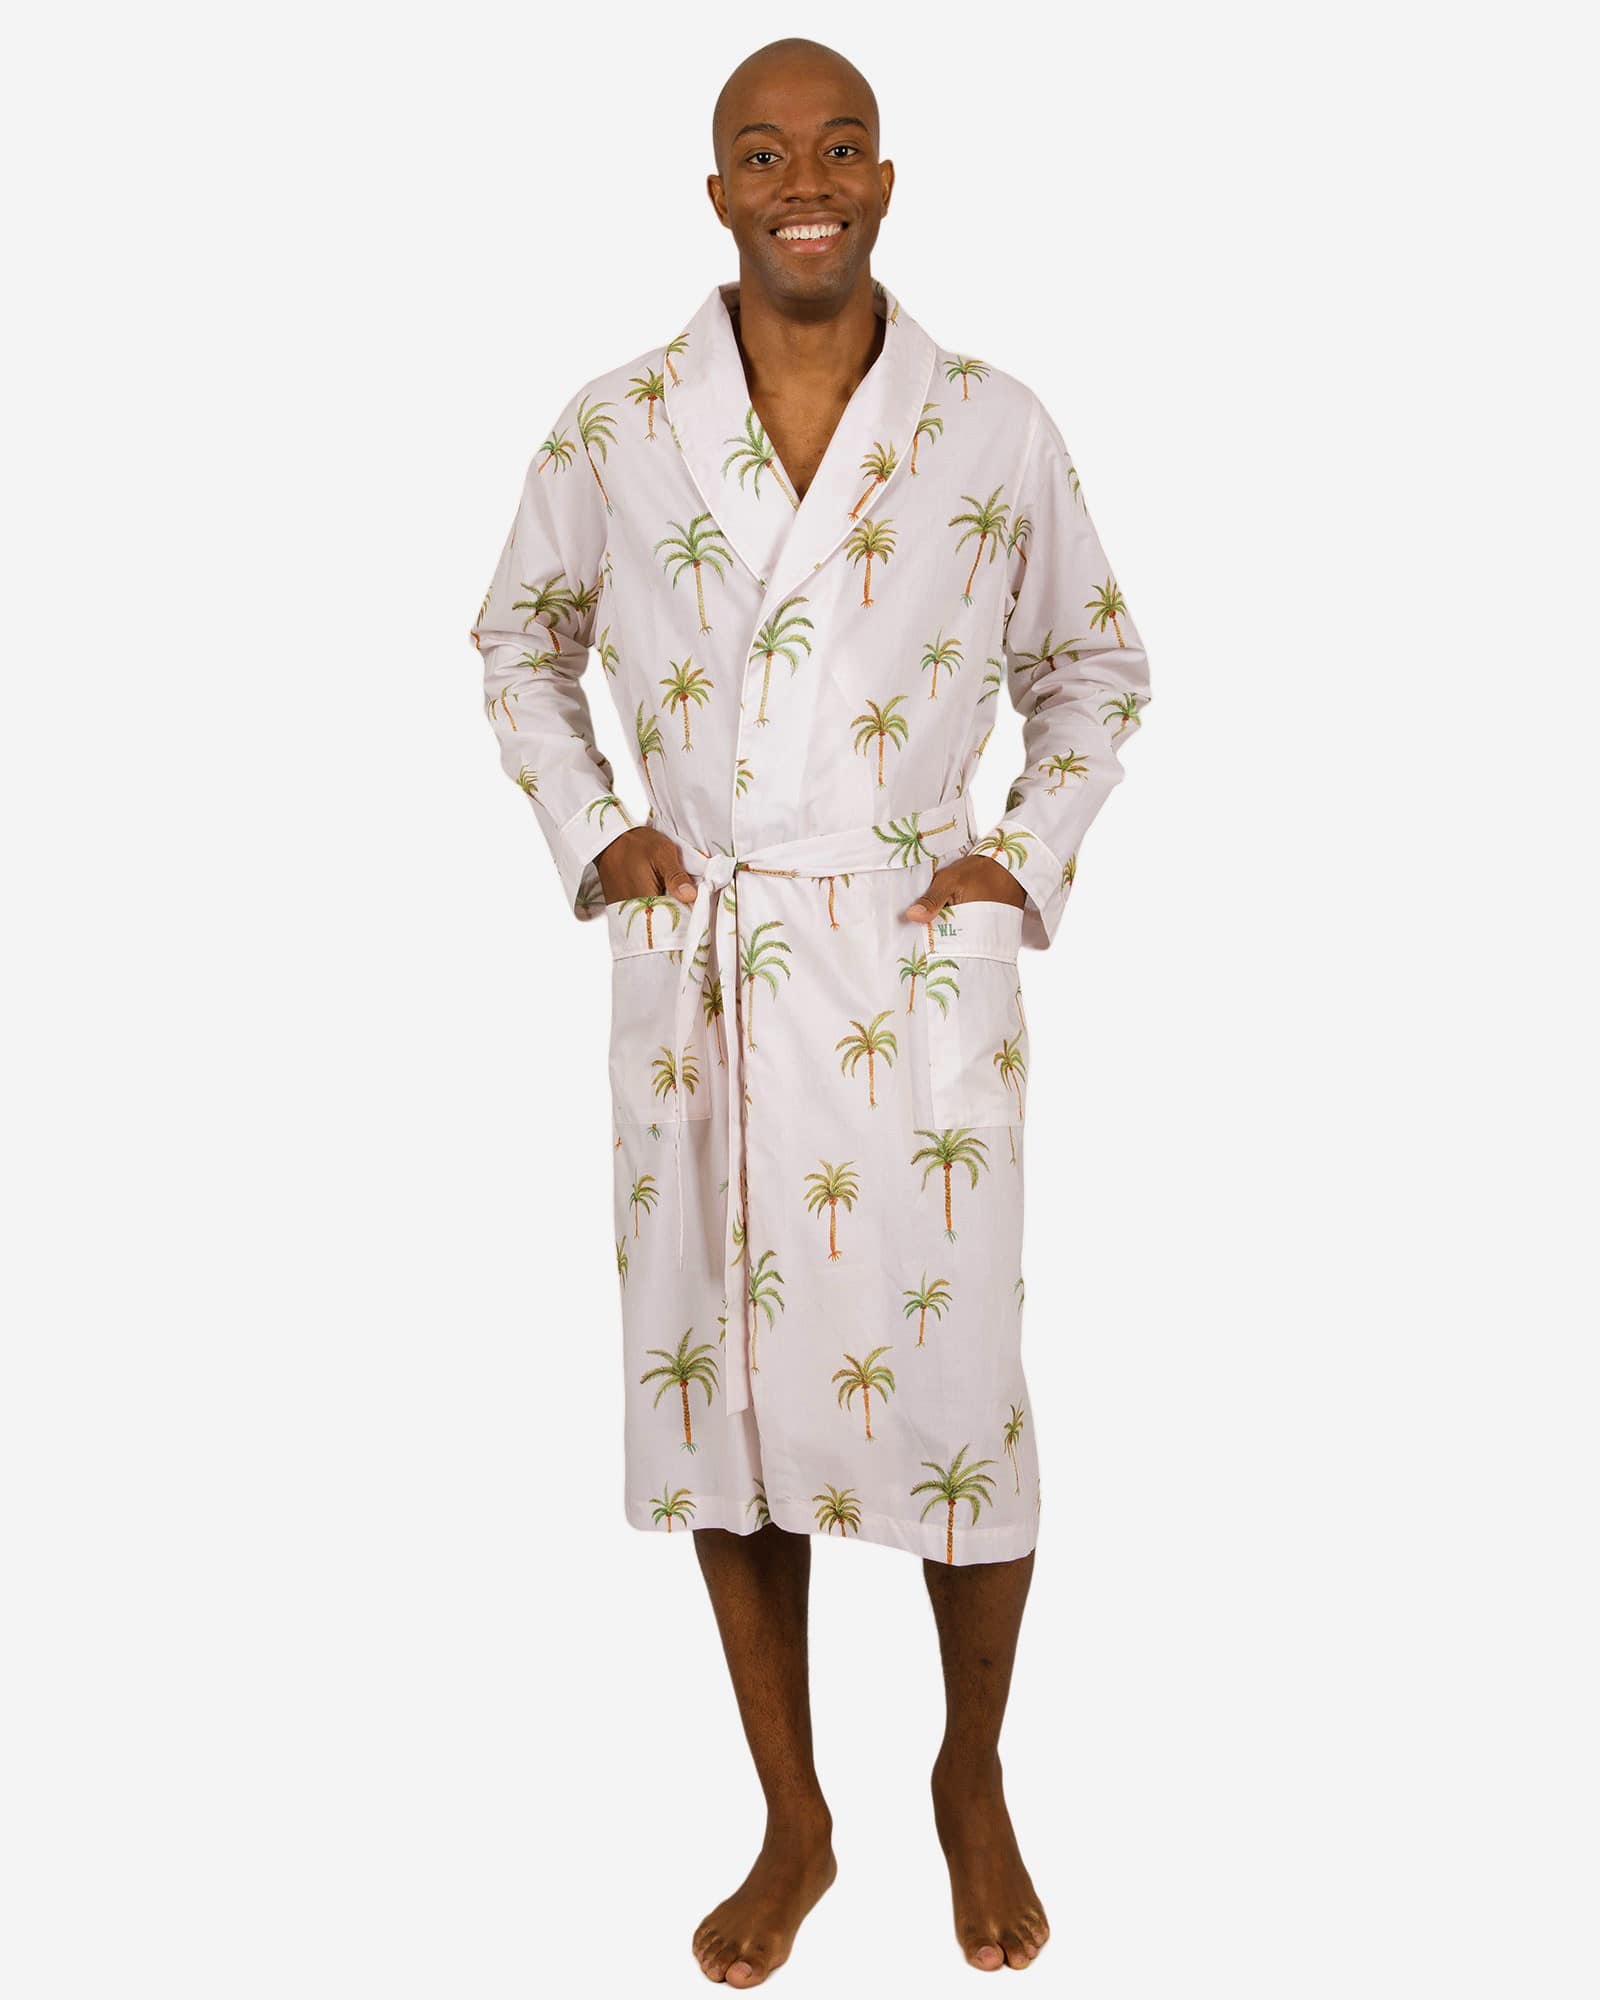 Grianlook Mens Dressing Gown Solid Color Wrap Robe Long Sleeve Bath Robes  Men Soft Nightwear Warm Hooded Towelling Black White S - Walmart.com